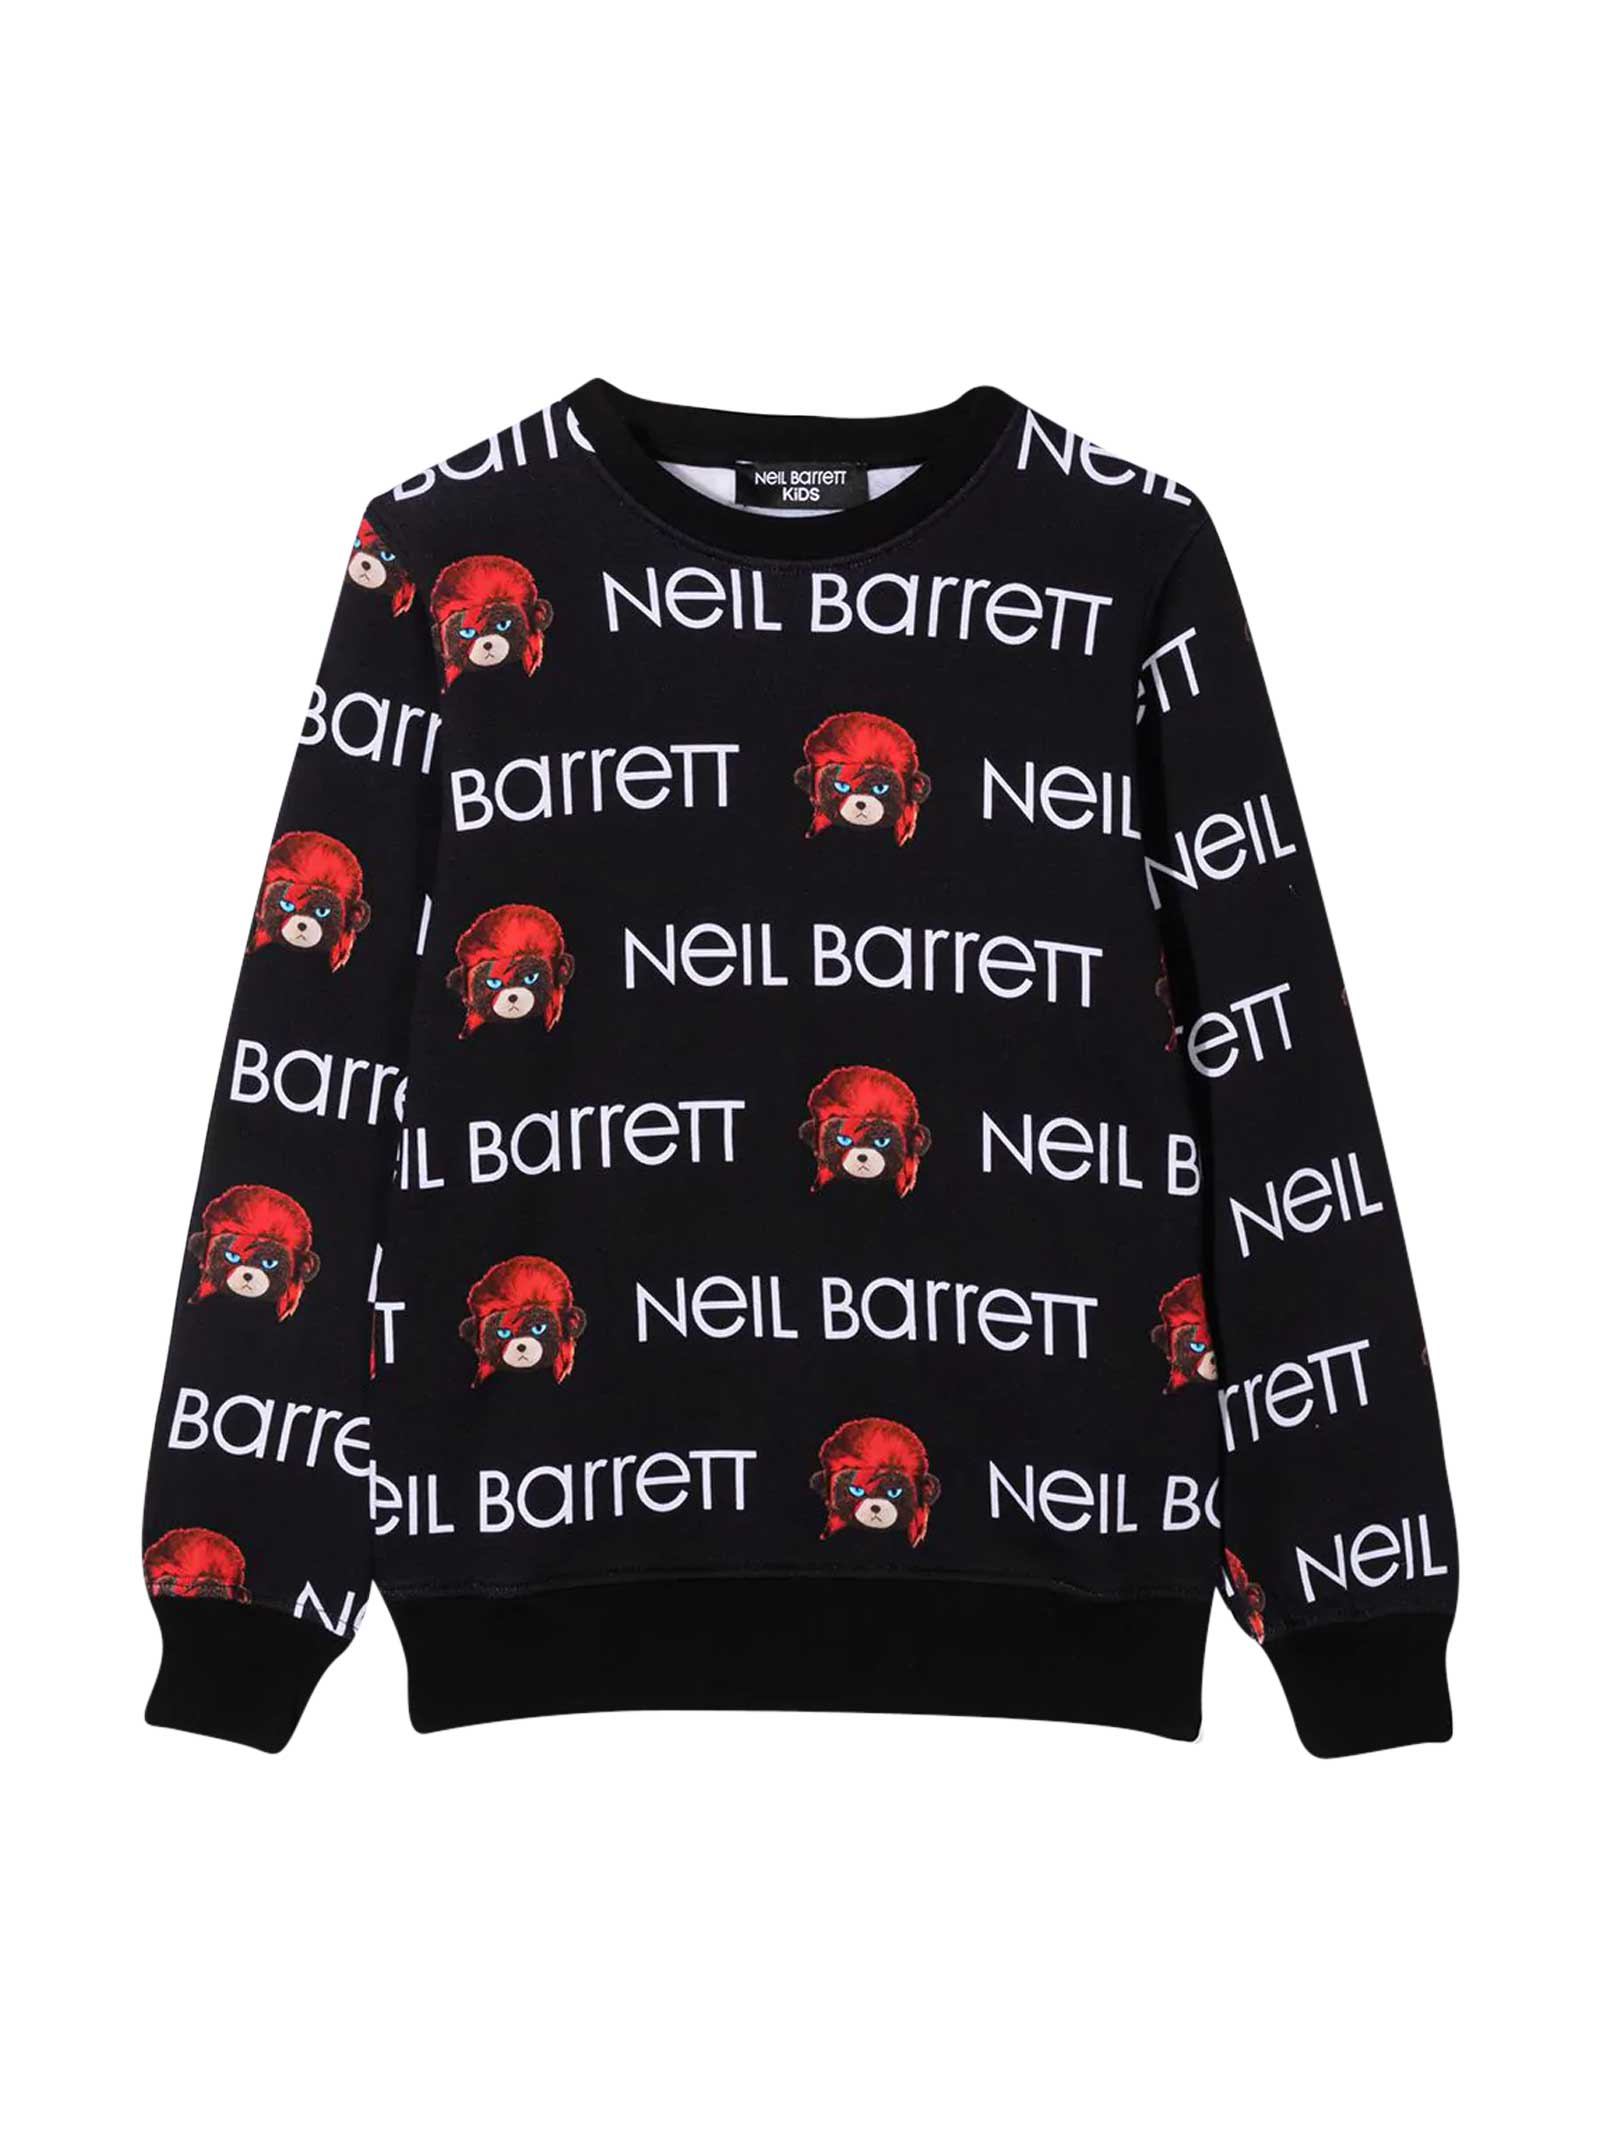 Neil Barrett Black Teen Sweatshirt